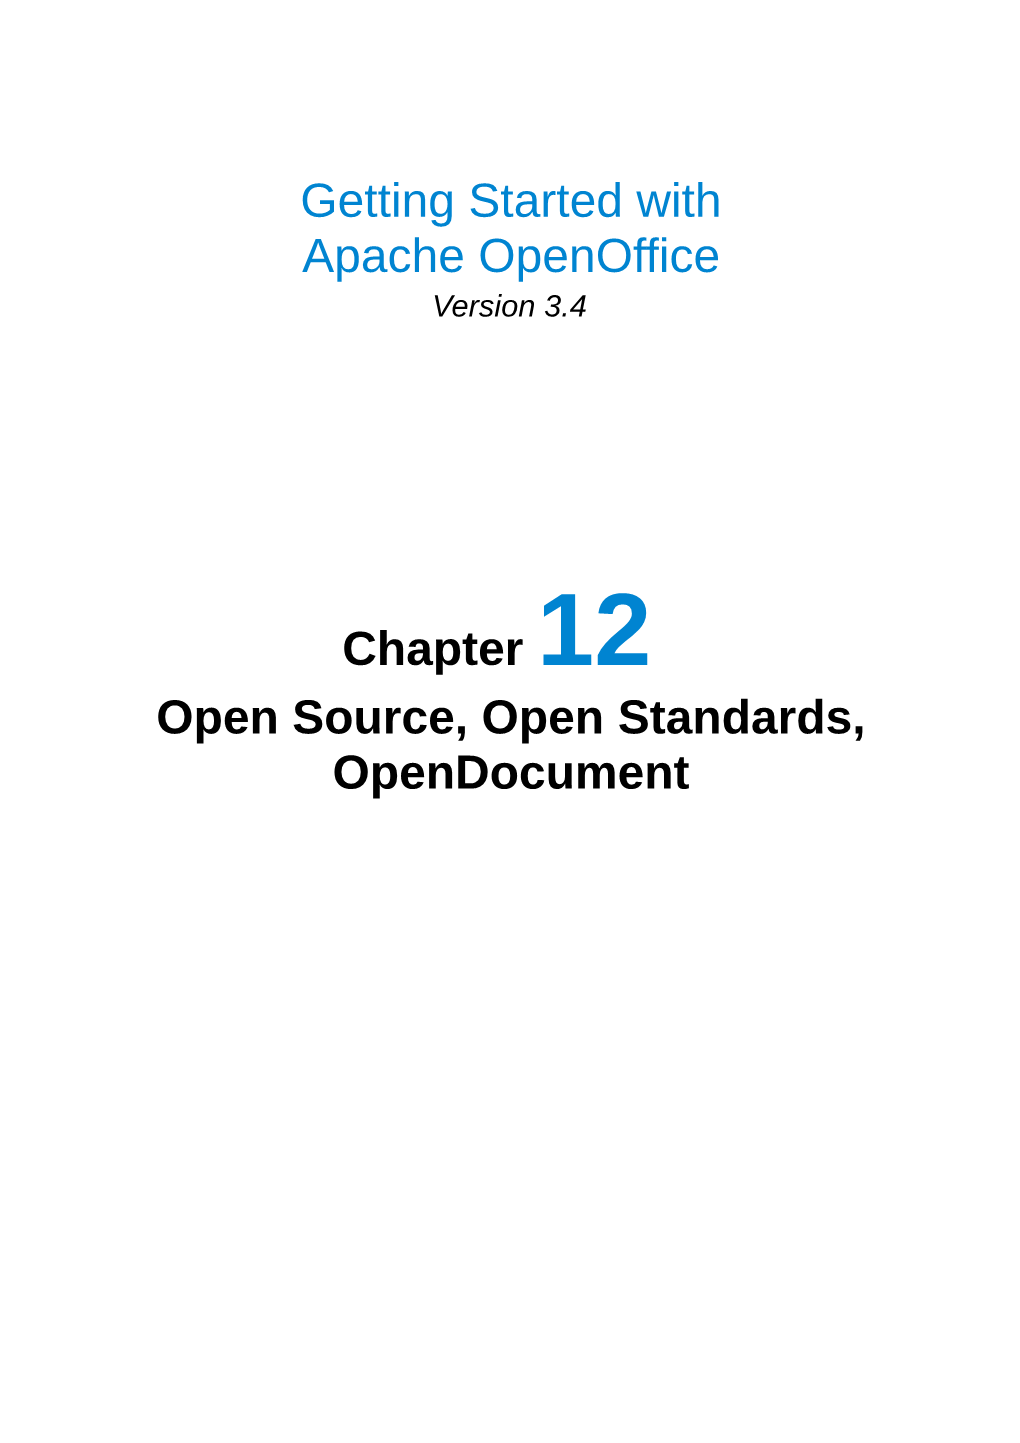 File Formats Apache Openoffice Can Open